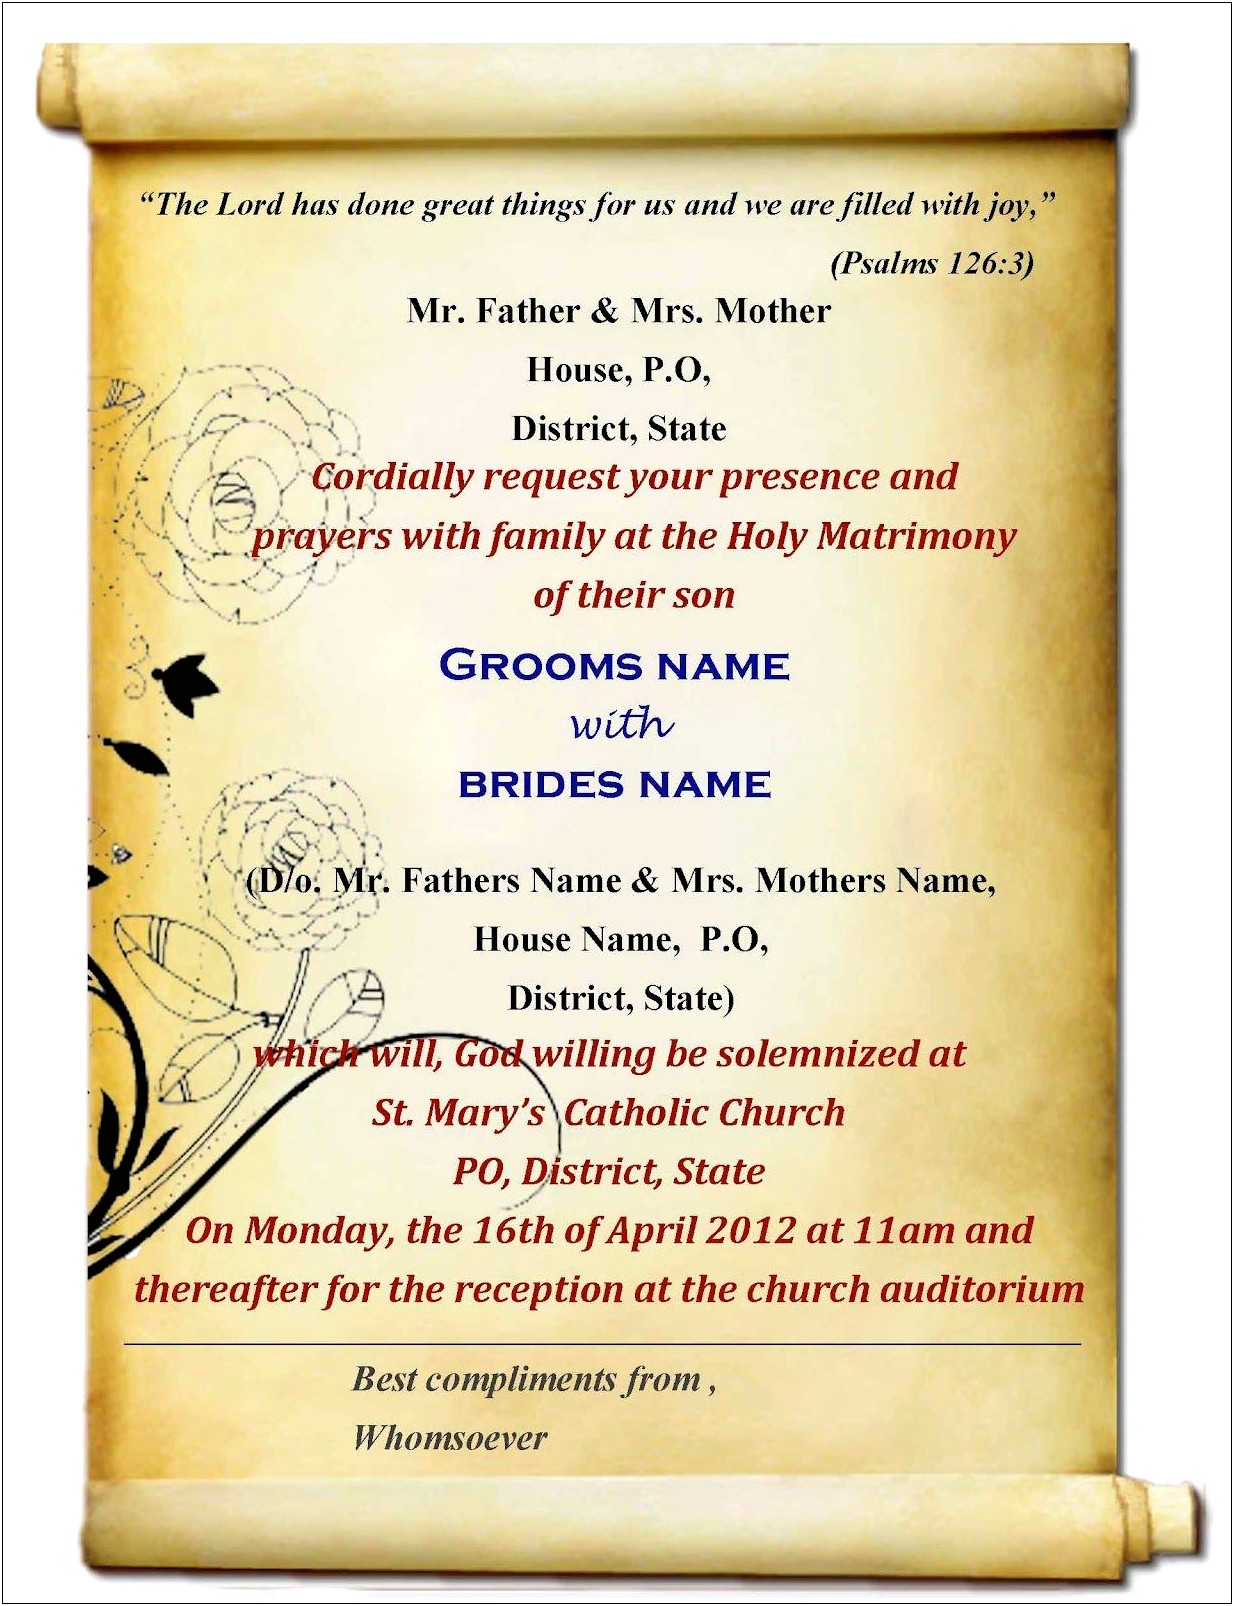 Muslim Wedding Invitation Cards Templates Free Download